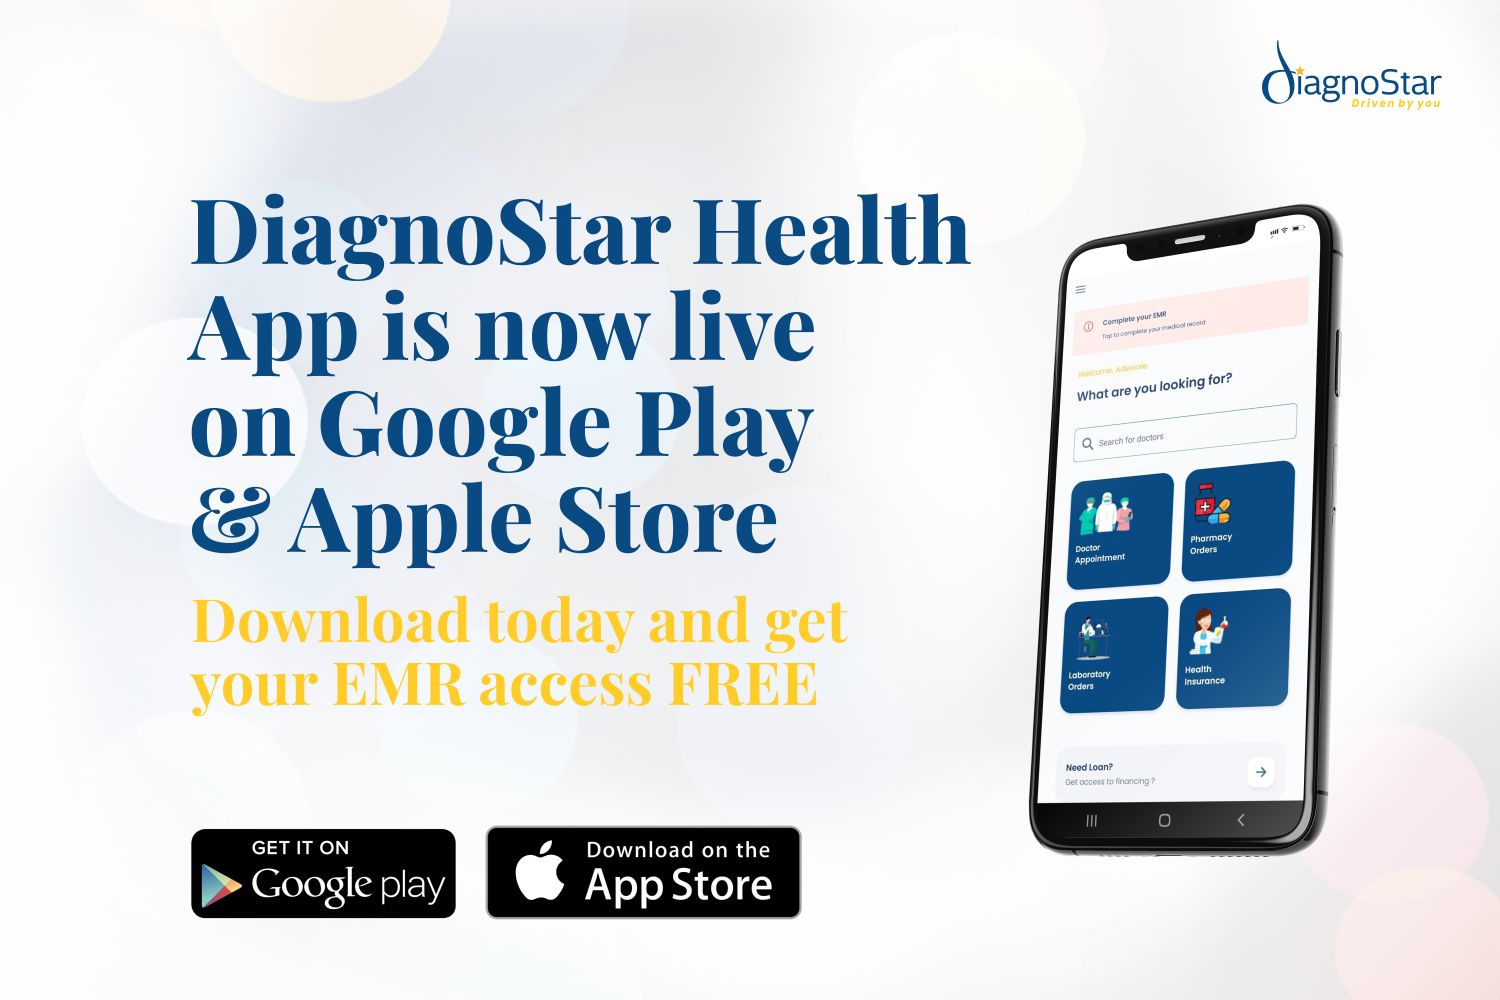 diagnostar-health-app